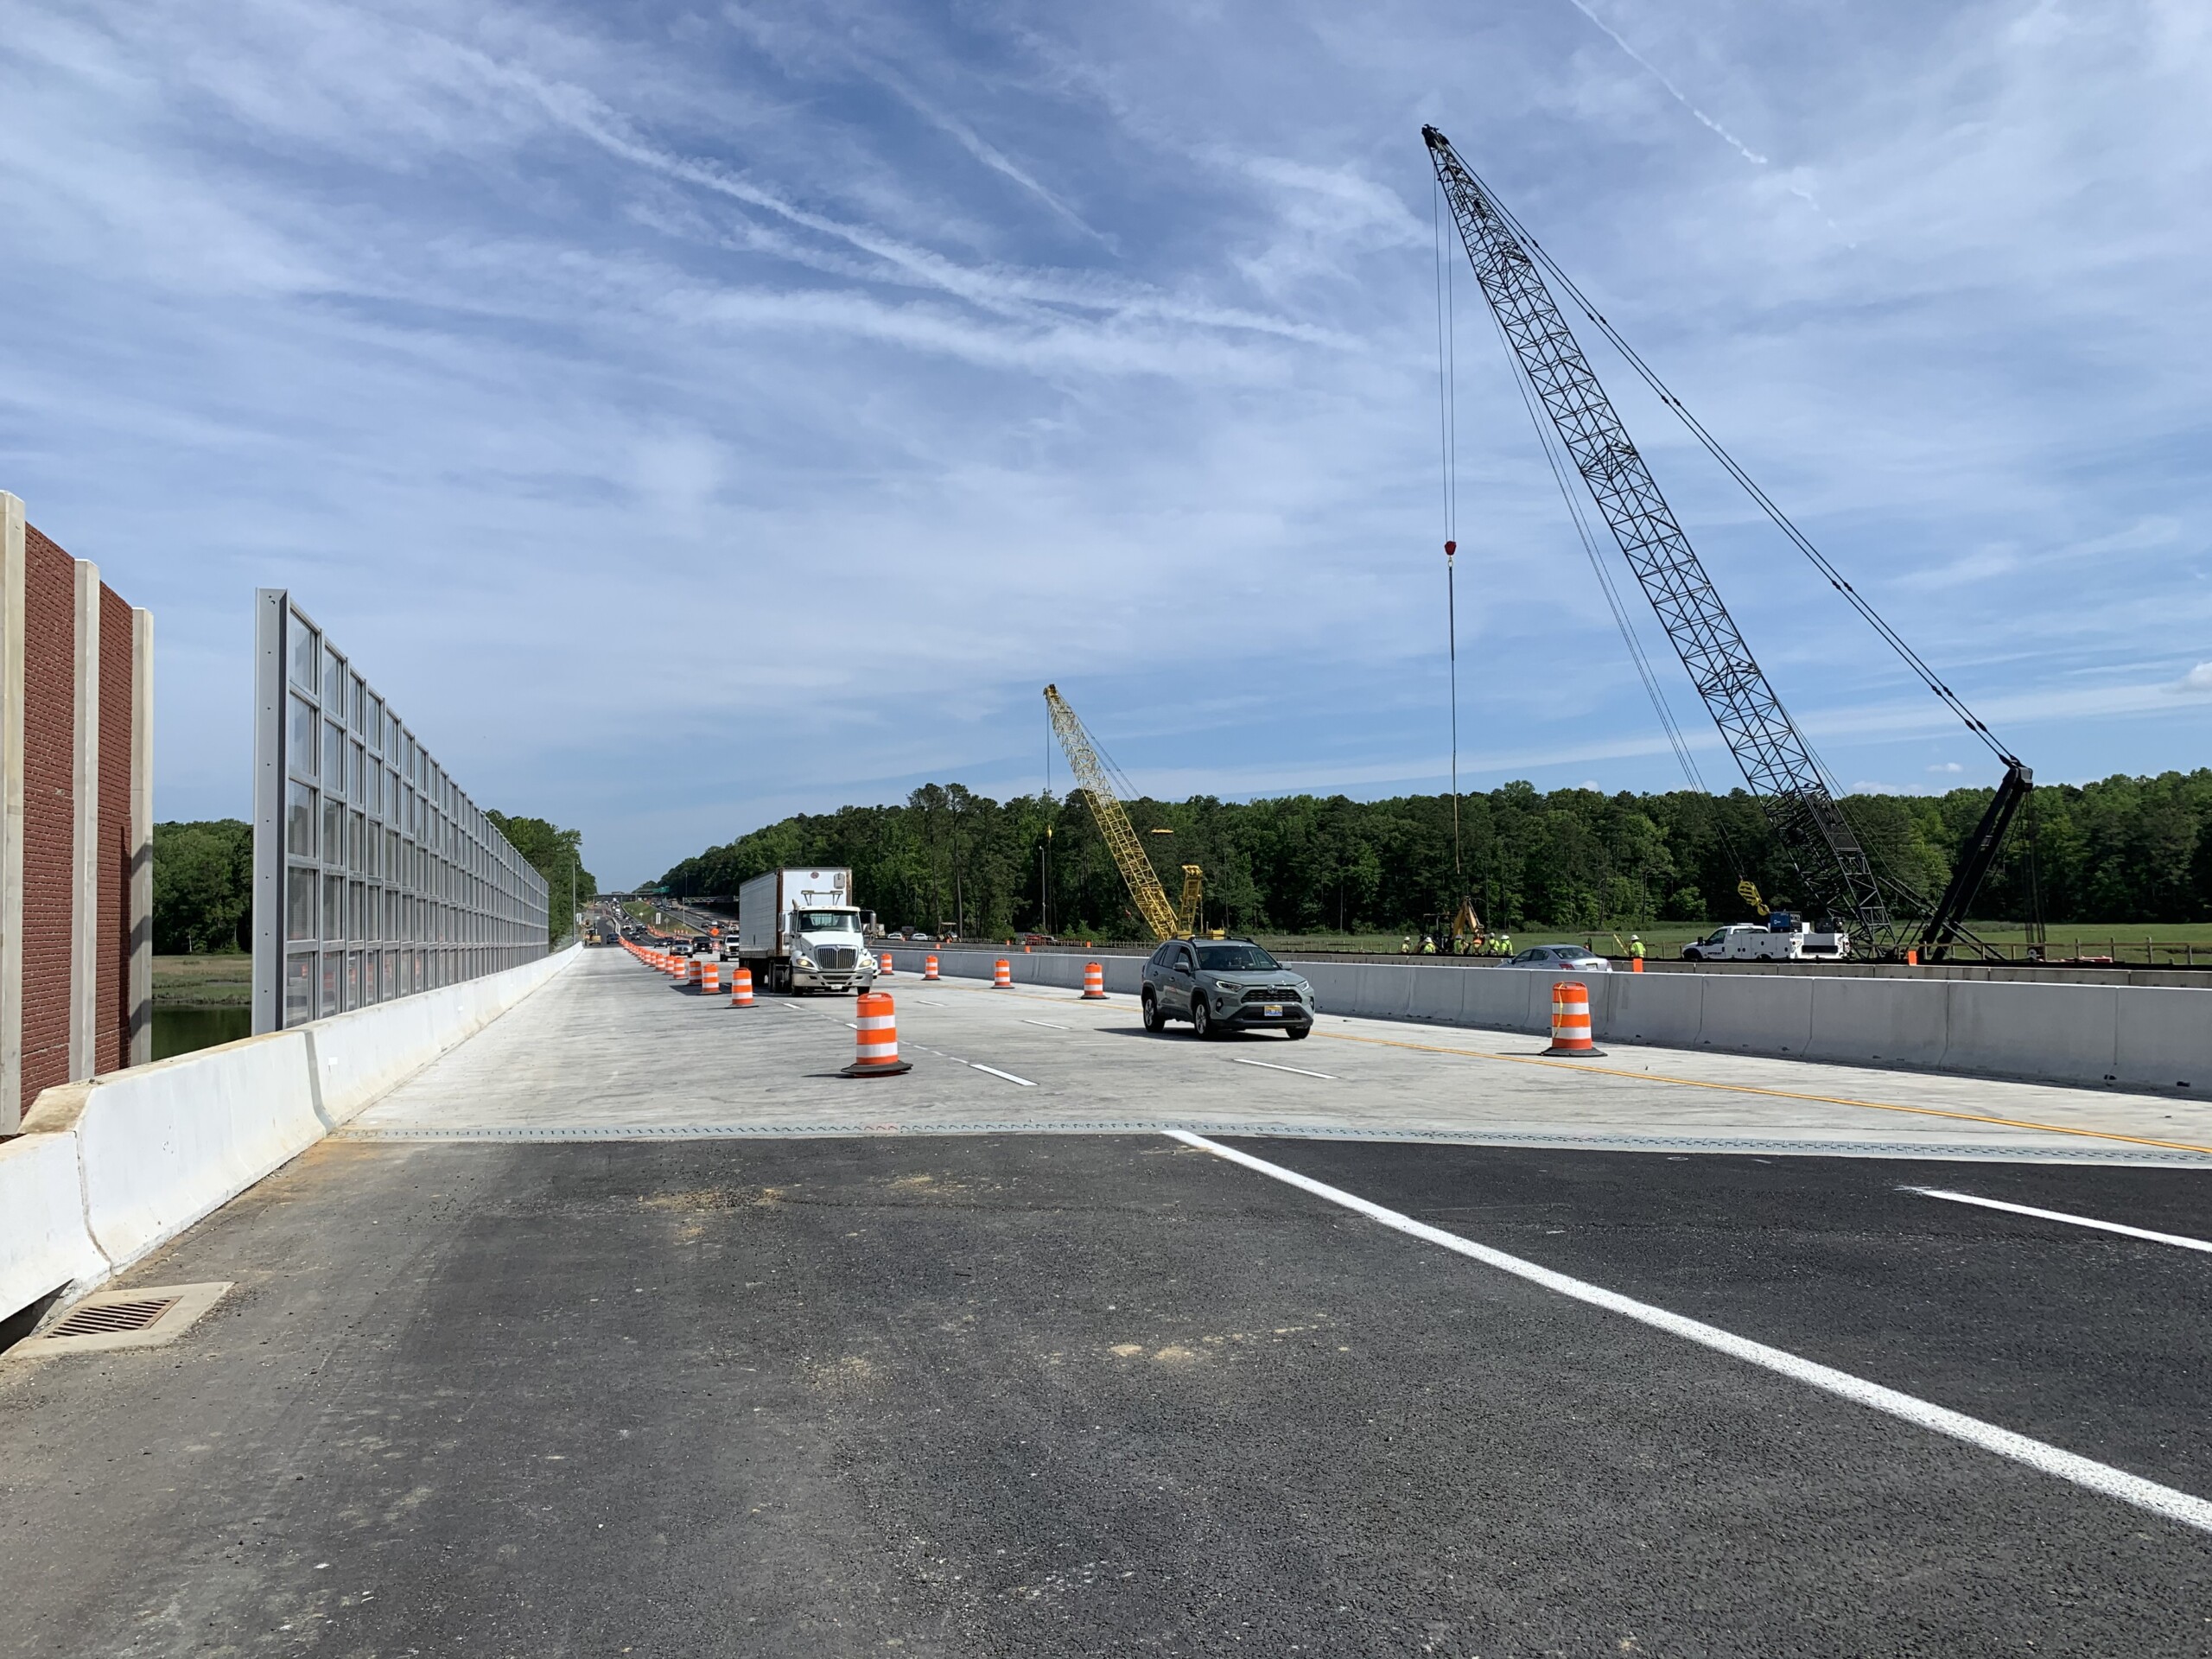 Transparent Ready-Fit Panels on Queen's Creek bridge in York County, VA.